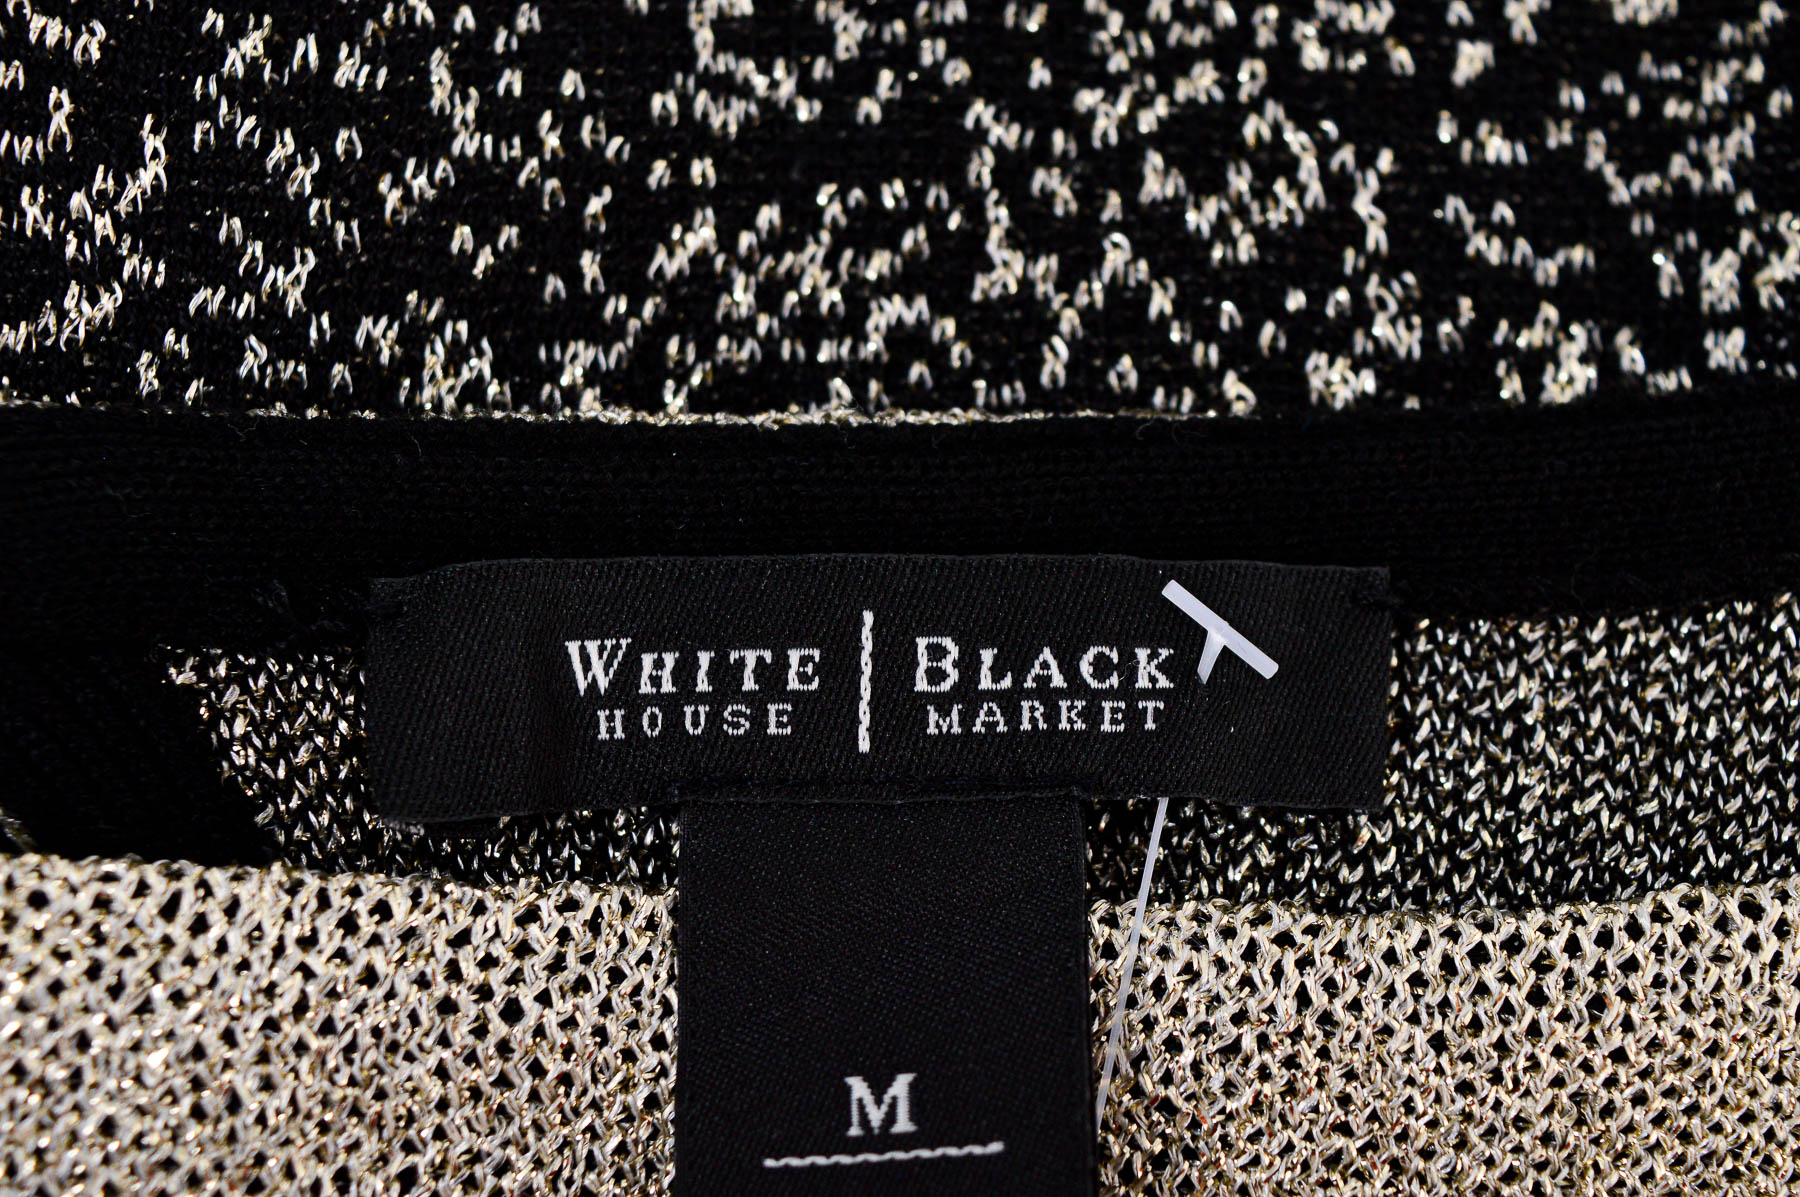 Bluza de damă - White House | Black Market - 2